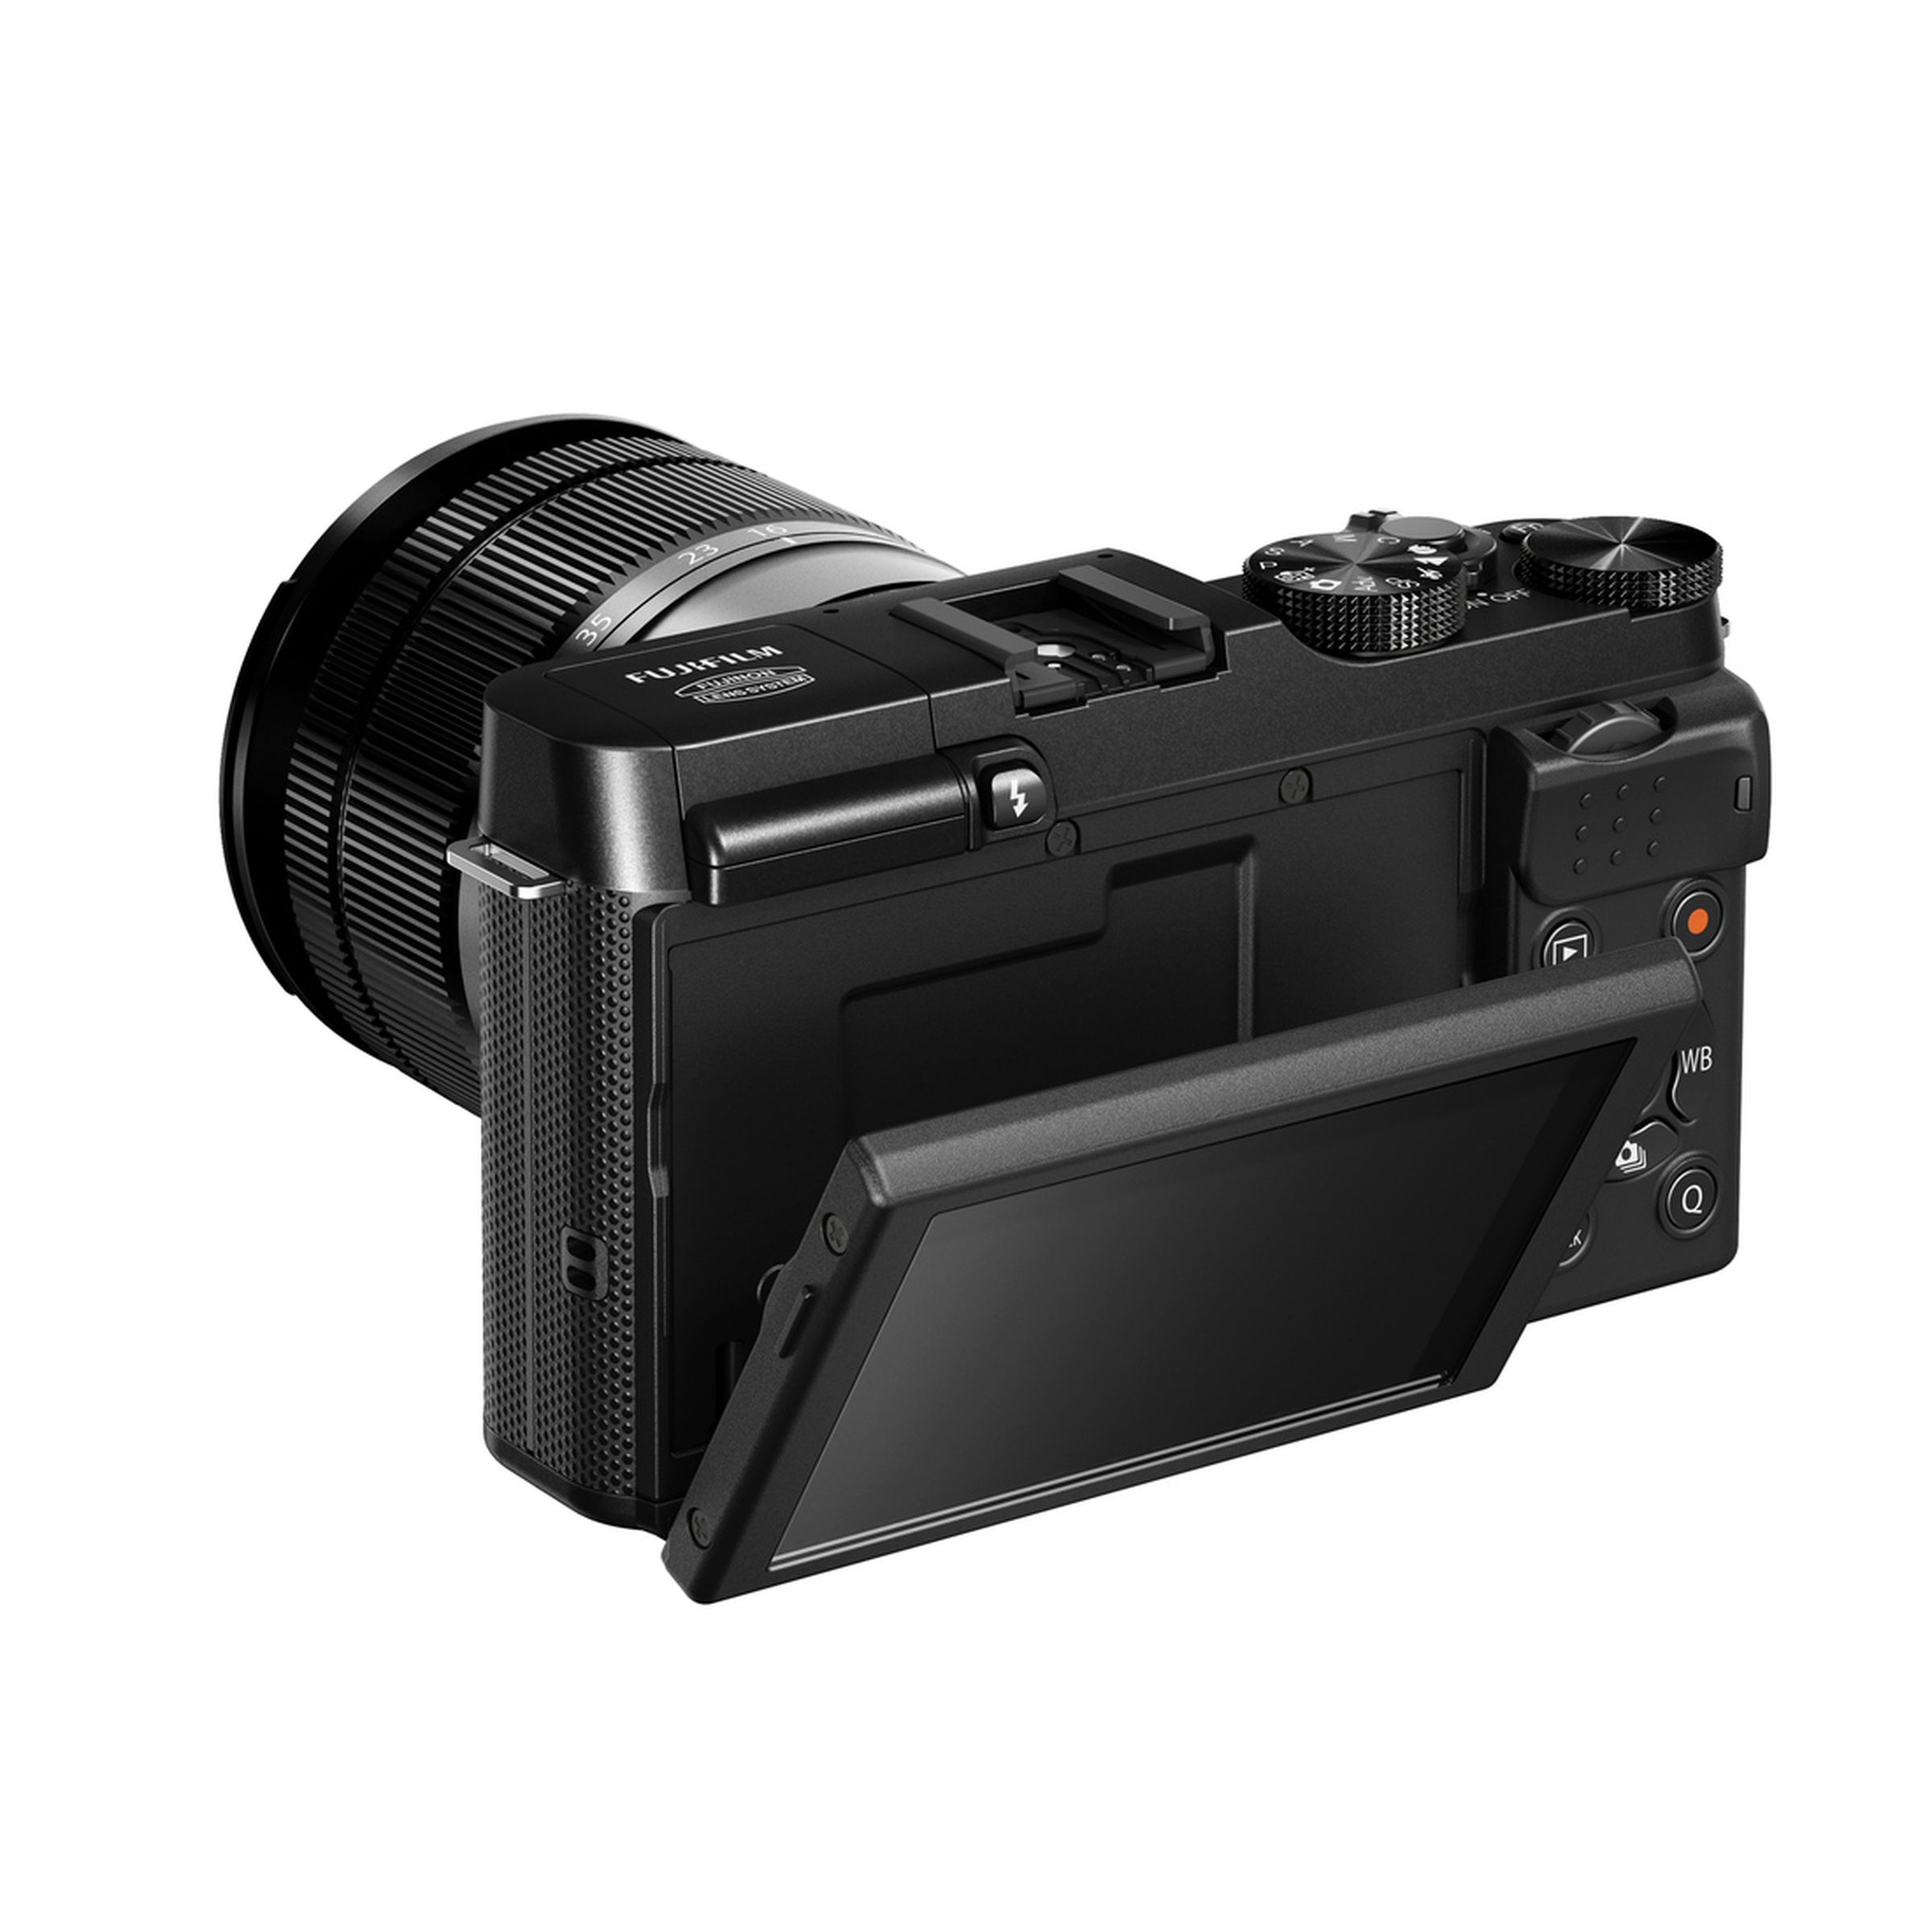 Fujifilm X-A1 press photos